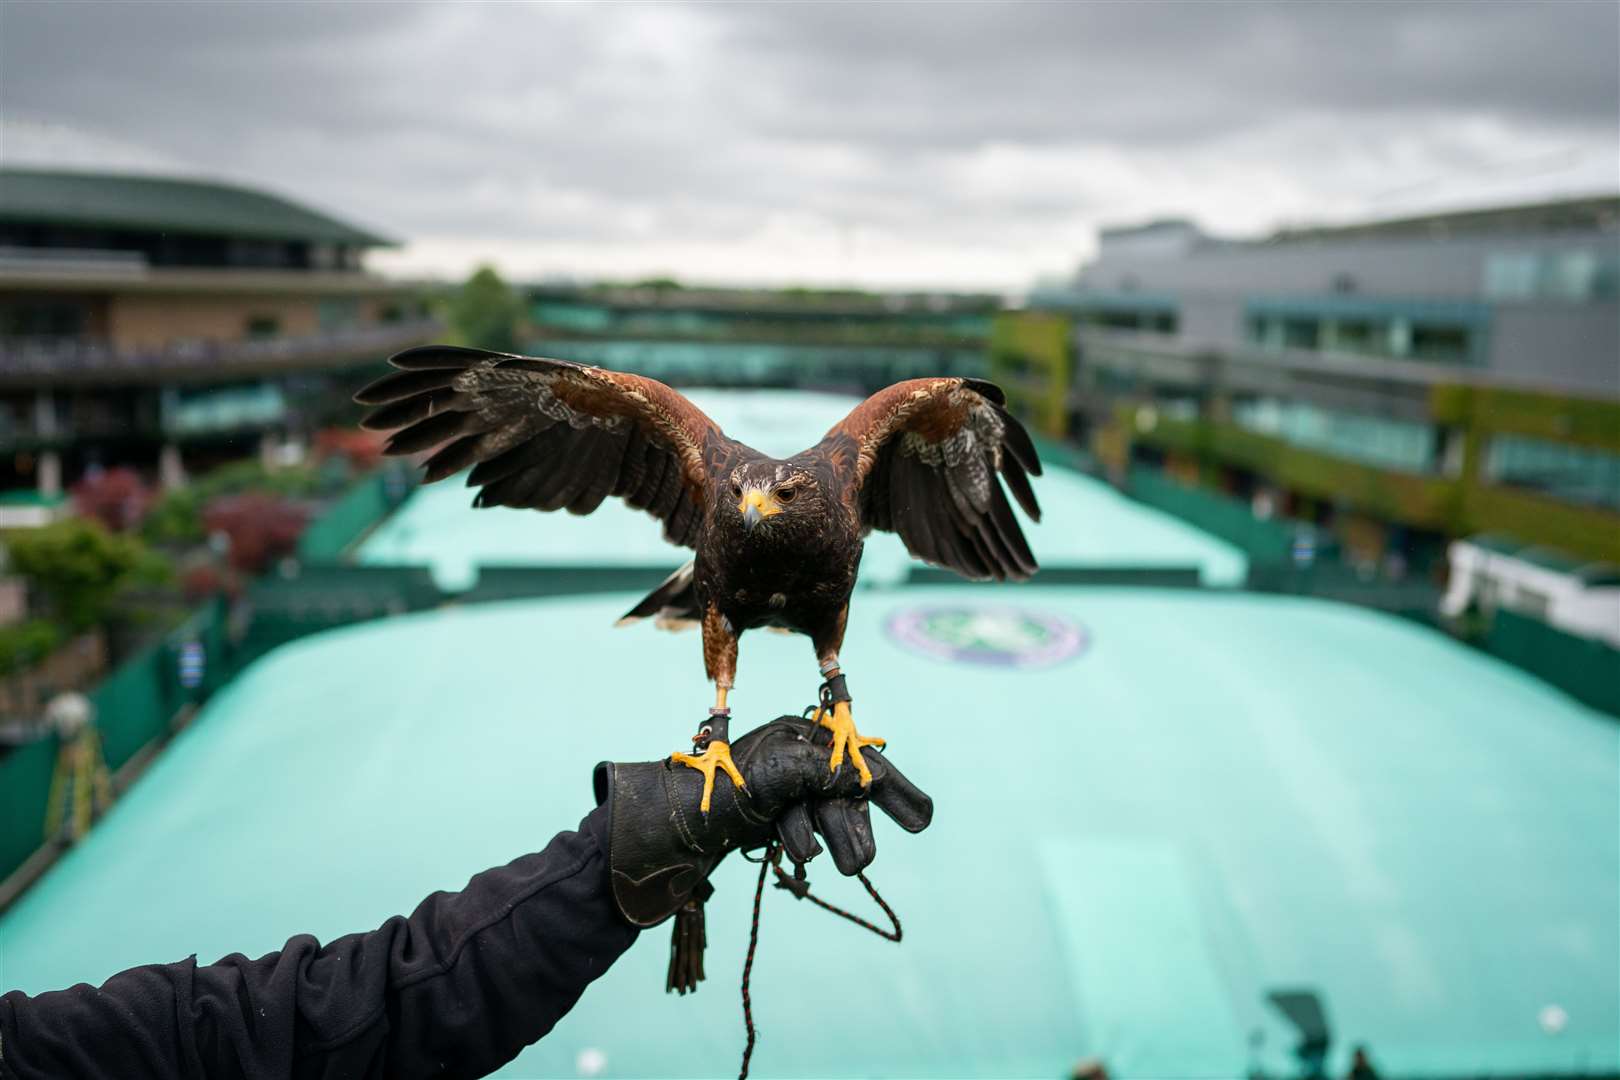 Rufus the Harris hawk at work on day three of Wimbledon 2022 (Aaron Chown/PA)